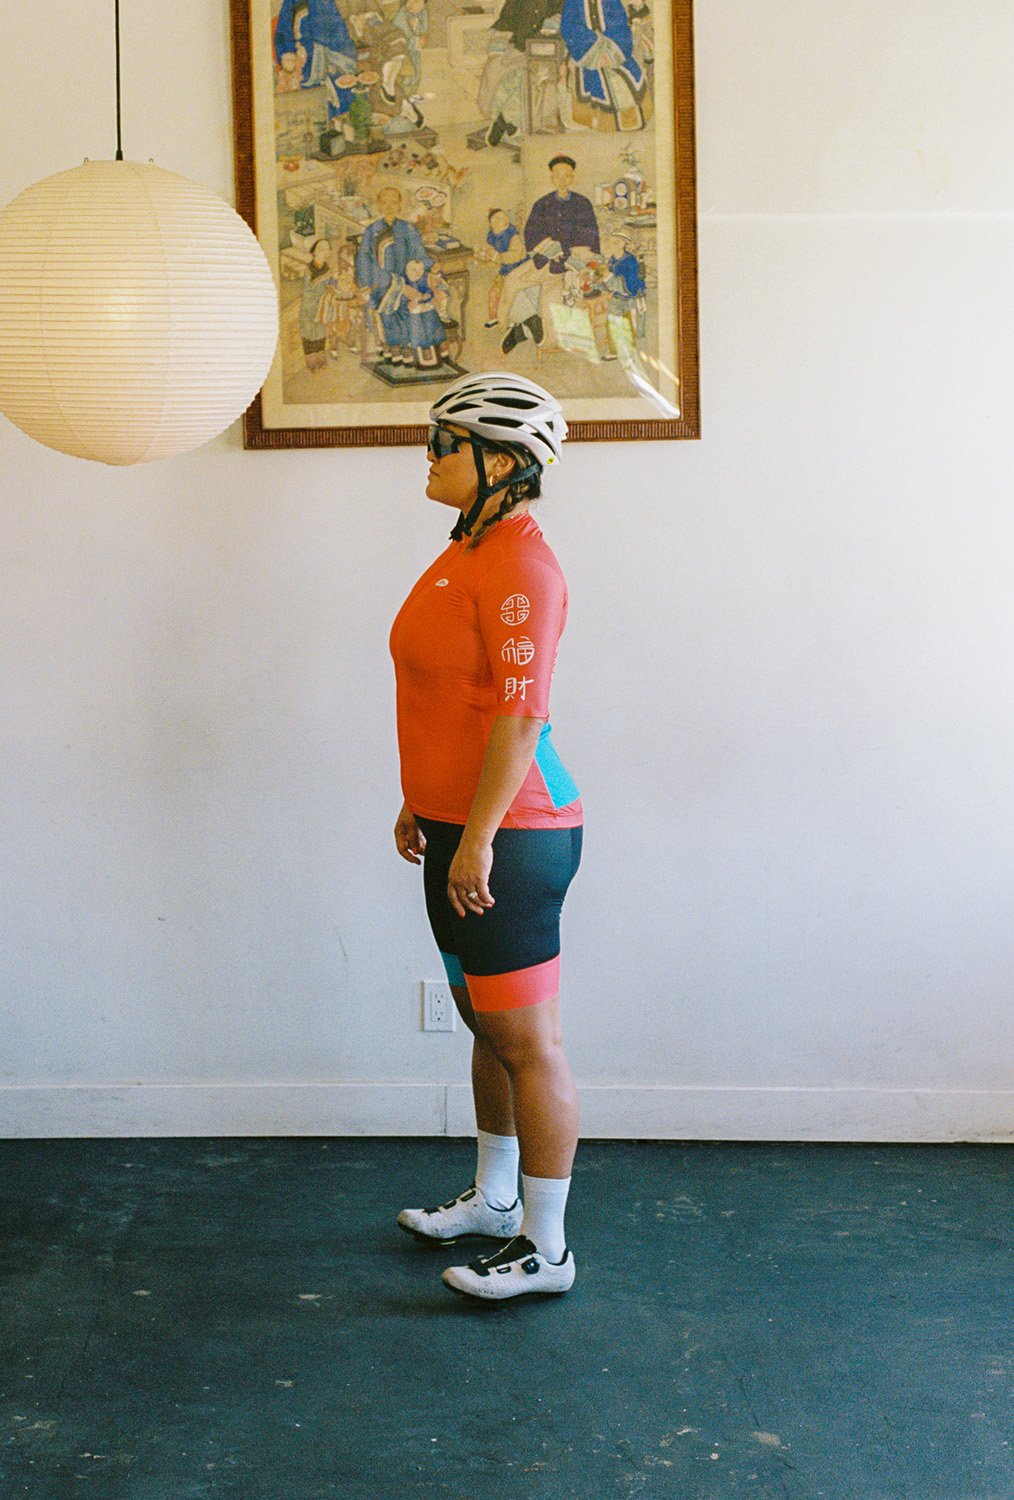 A woman wearing a cycling uniform